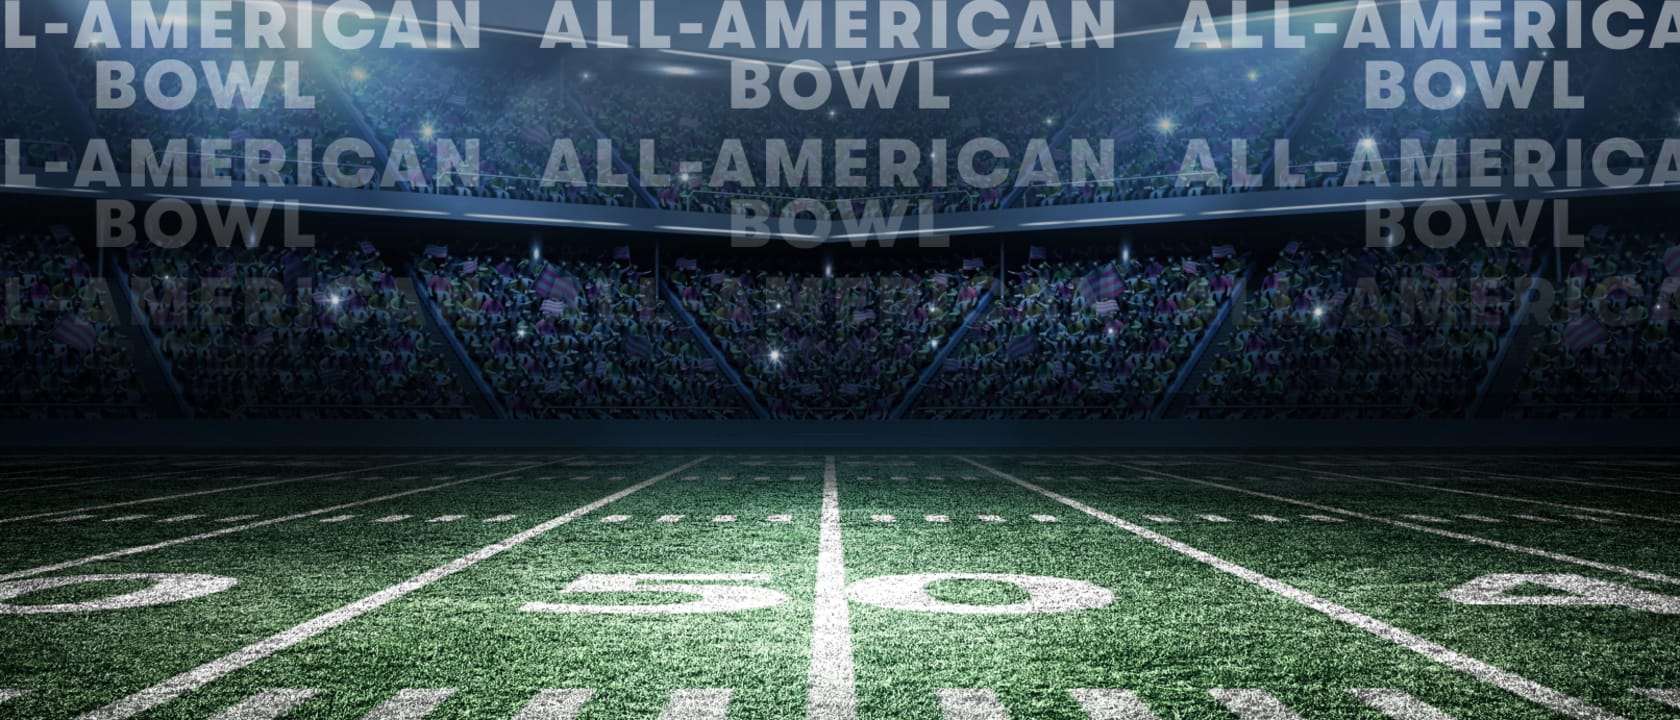 All-American Bowl